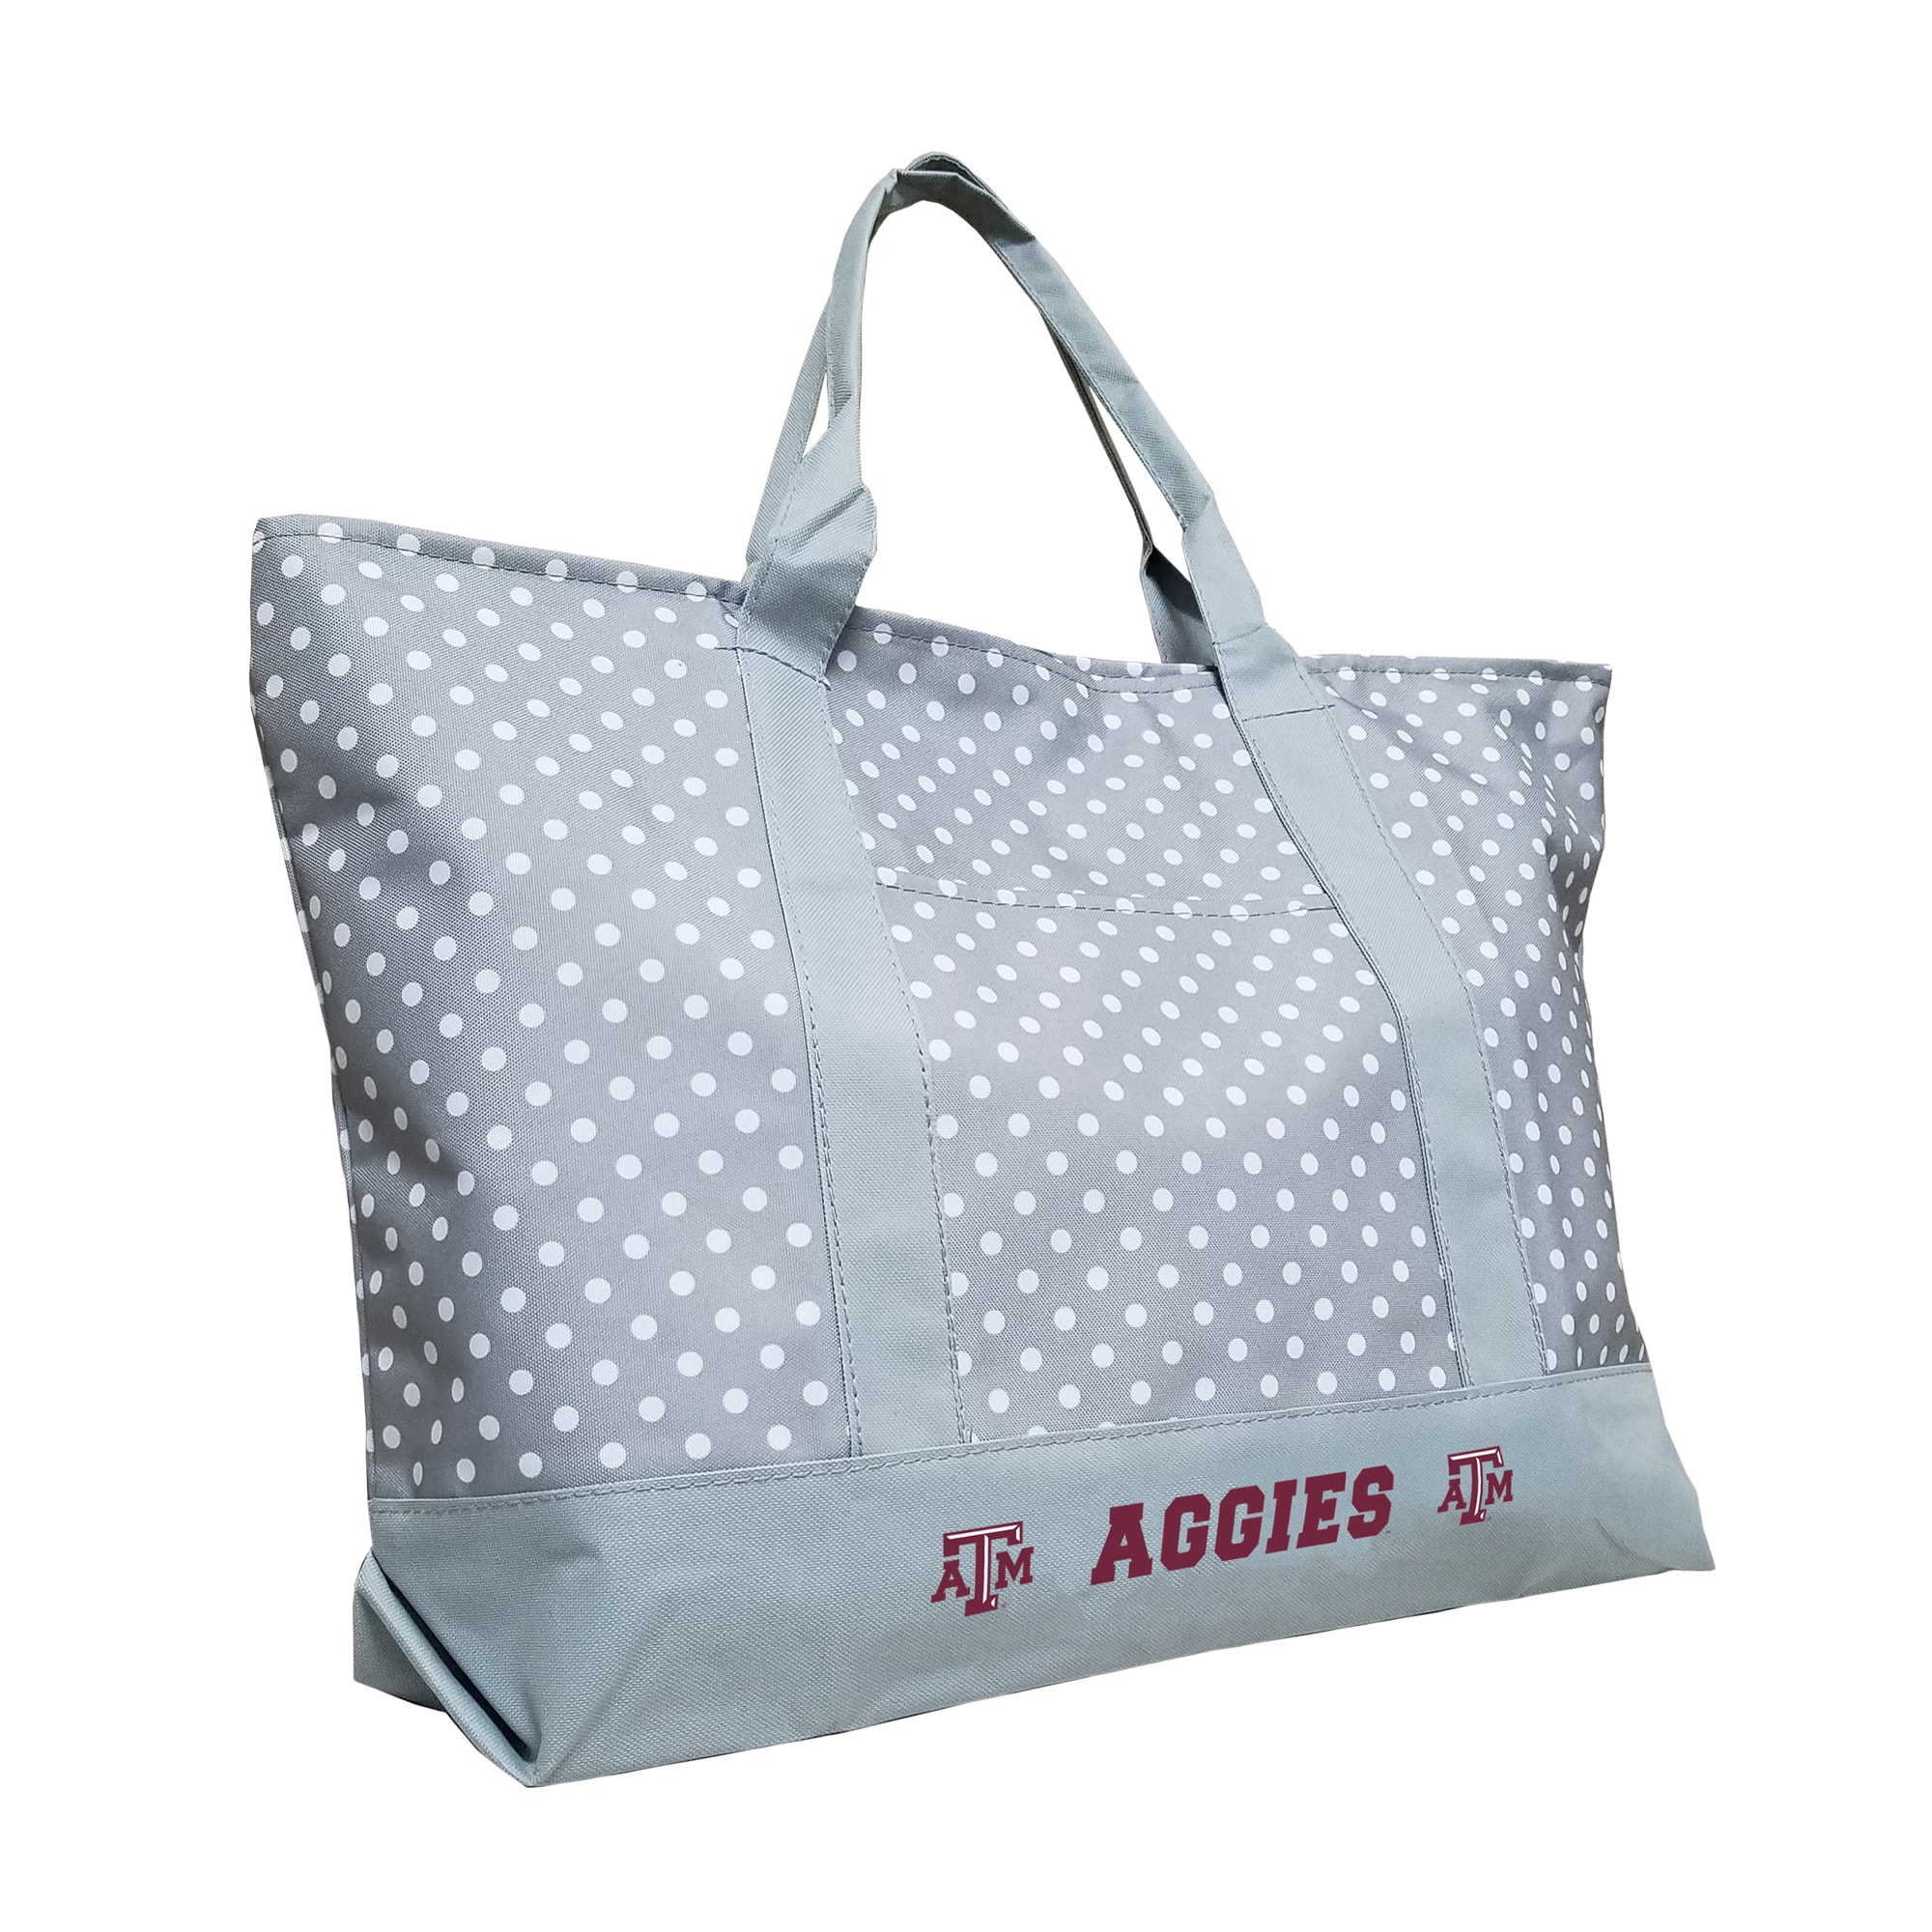 Texas A&M Aggies Dot Tote Bag - image 1 of 1